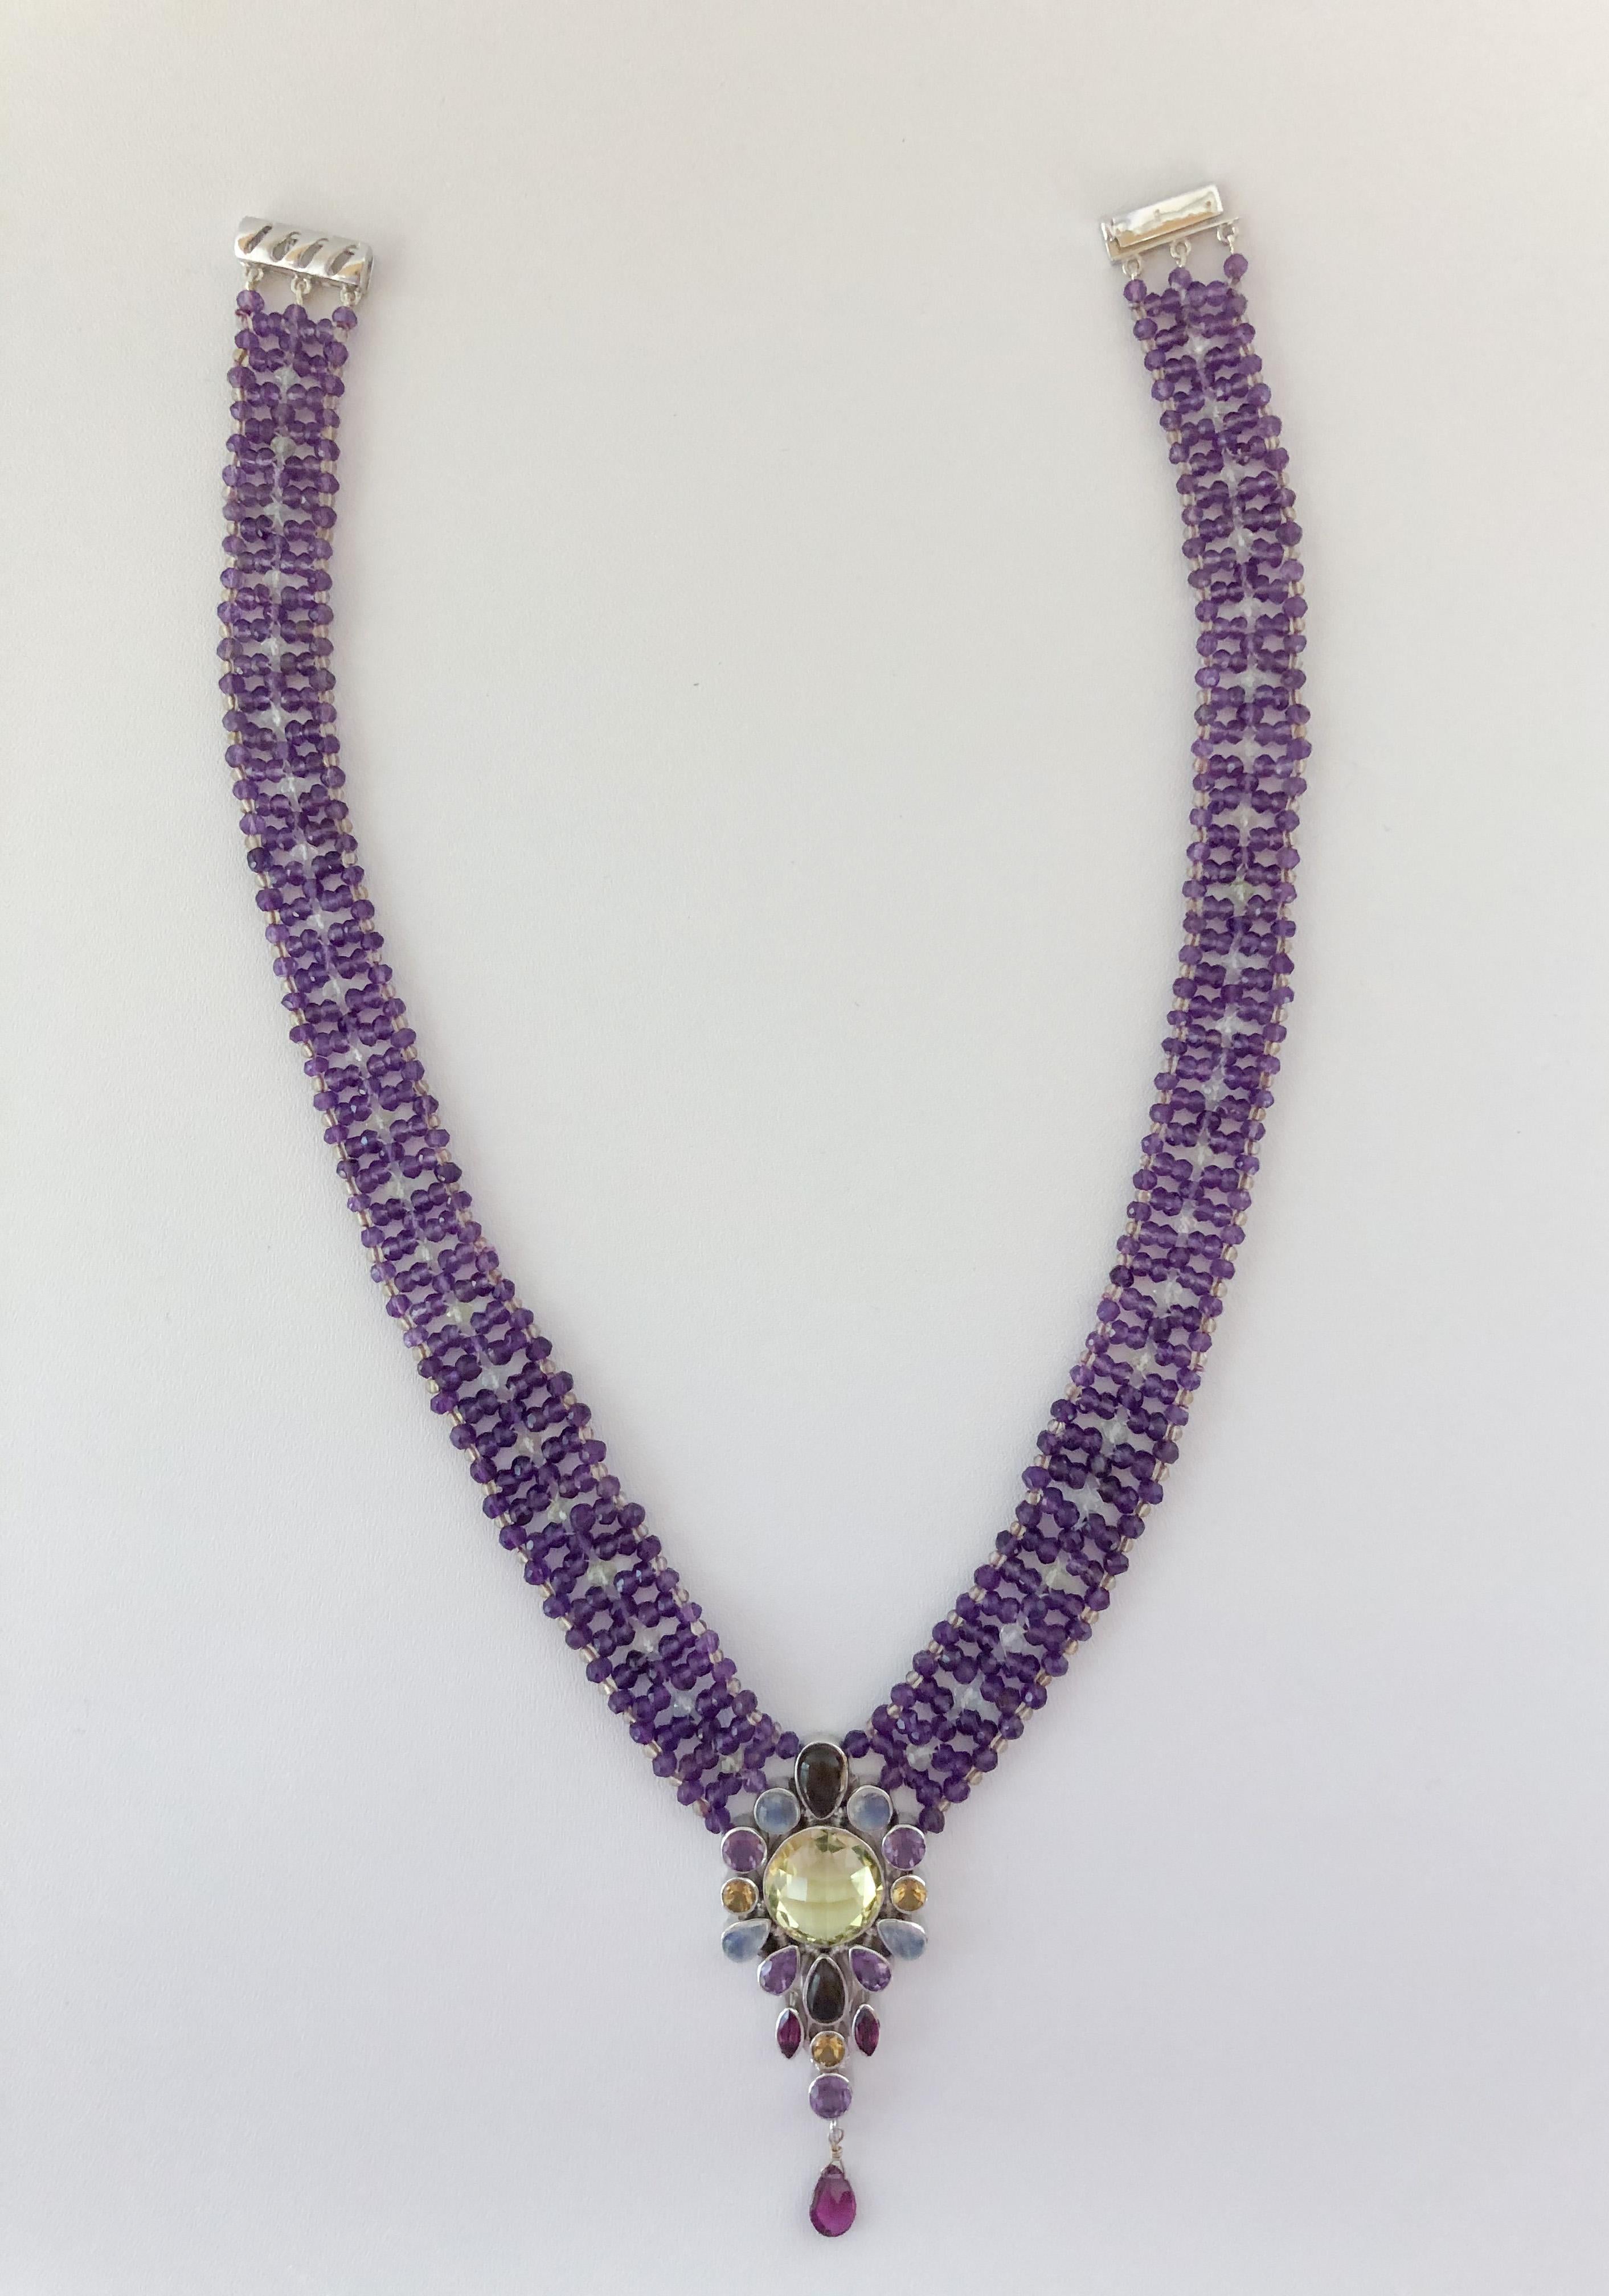 Brilliant Cut Marina J. Stunning Amethyst Woven Necklace with Garnet, Citrine, Topaz and Opal